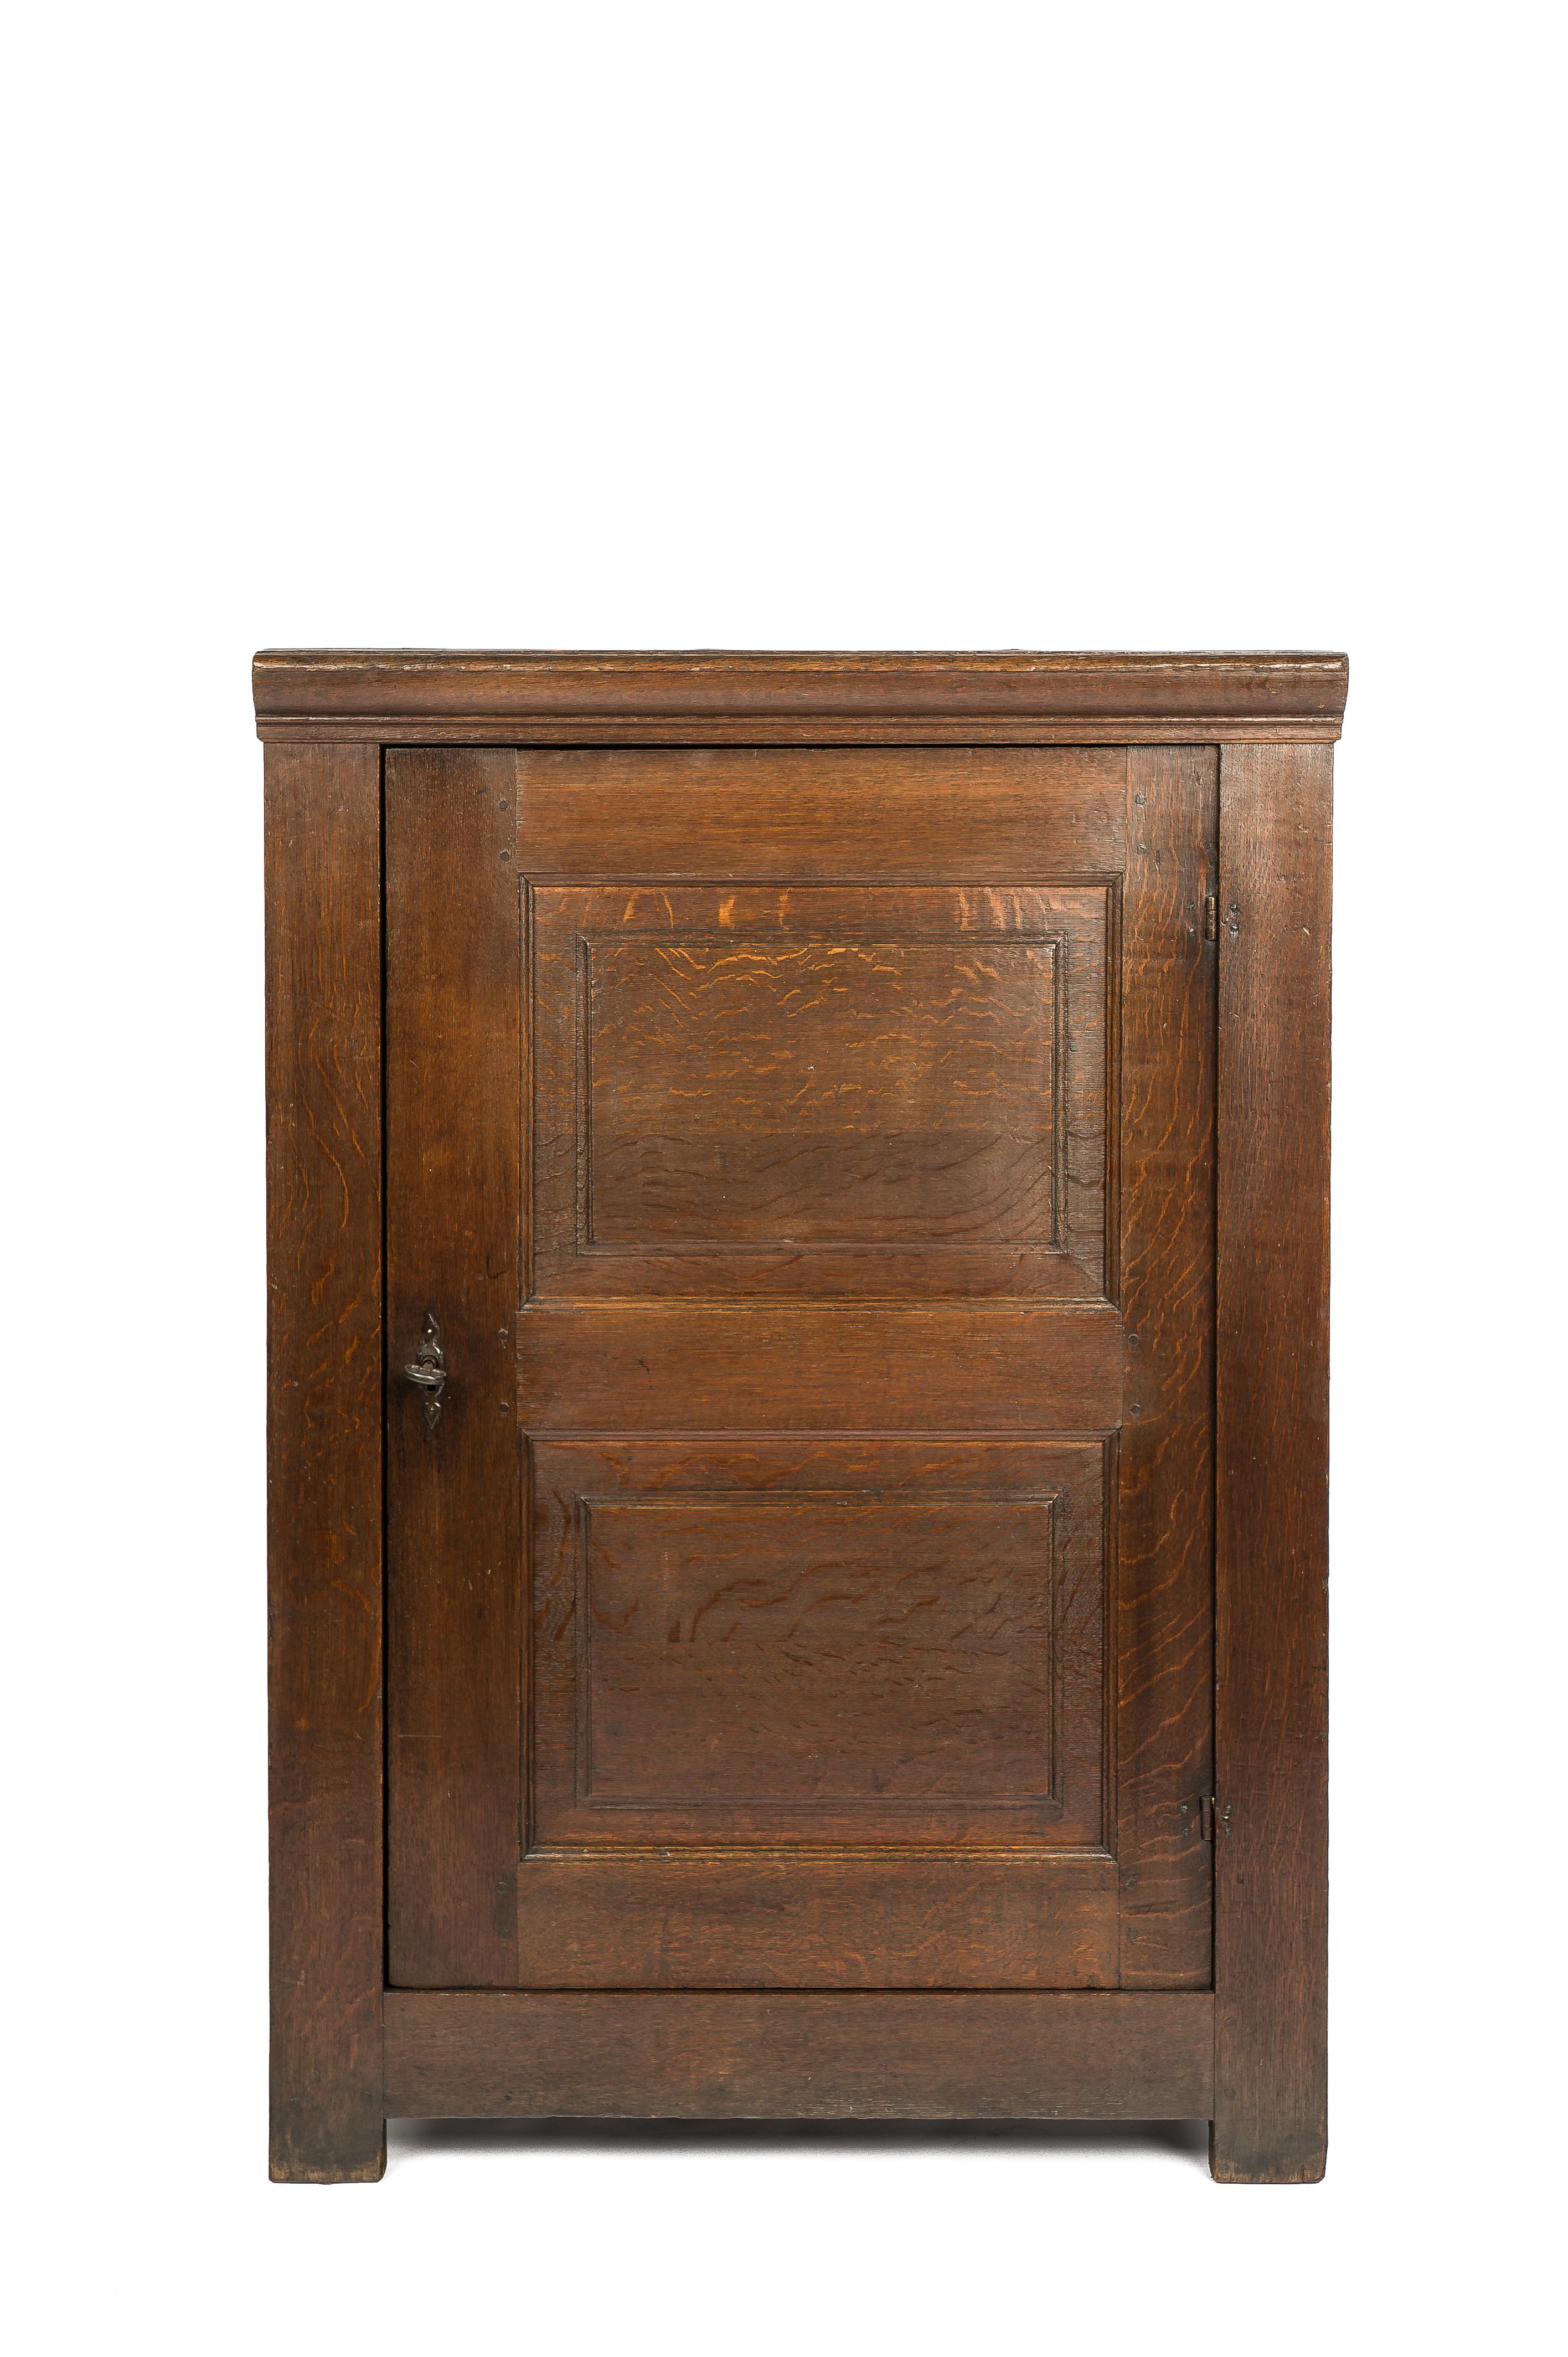 Antique Late 17th Century Dutch Renaissance Single-Door Cabinet in Solid Oak For Sale 4